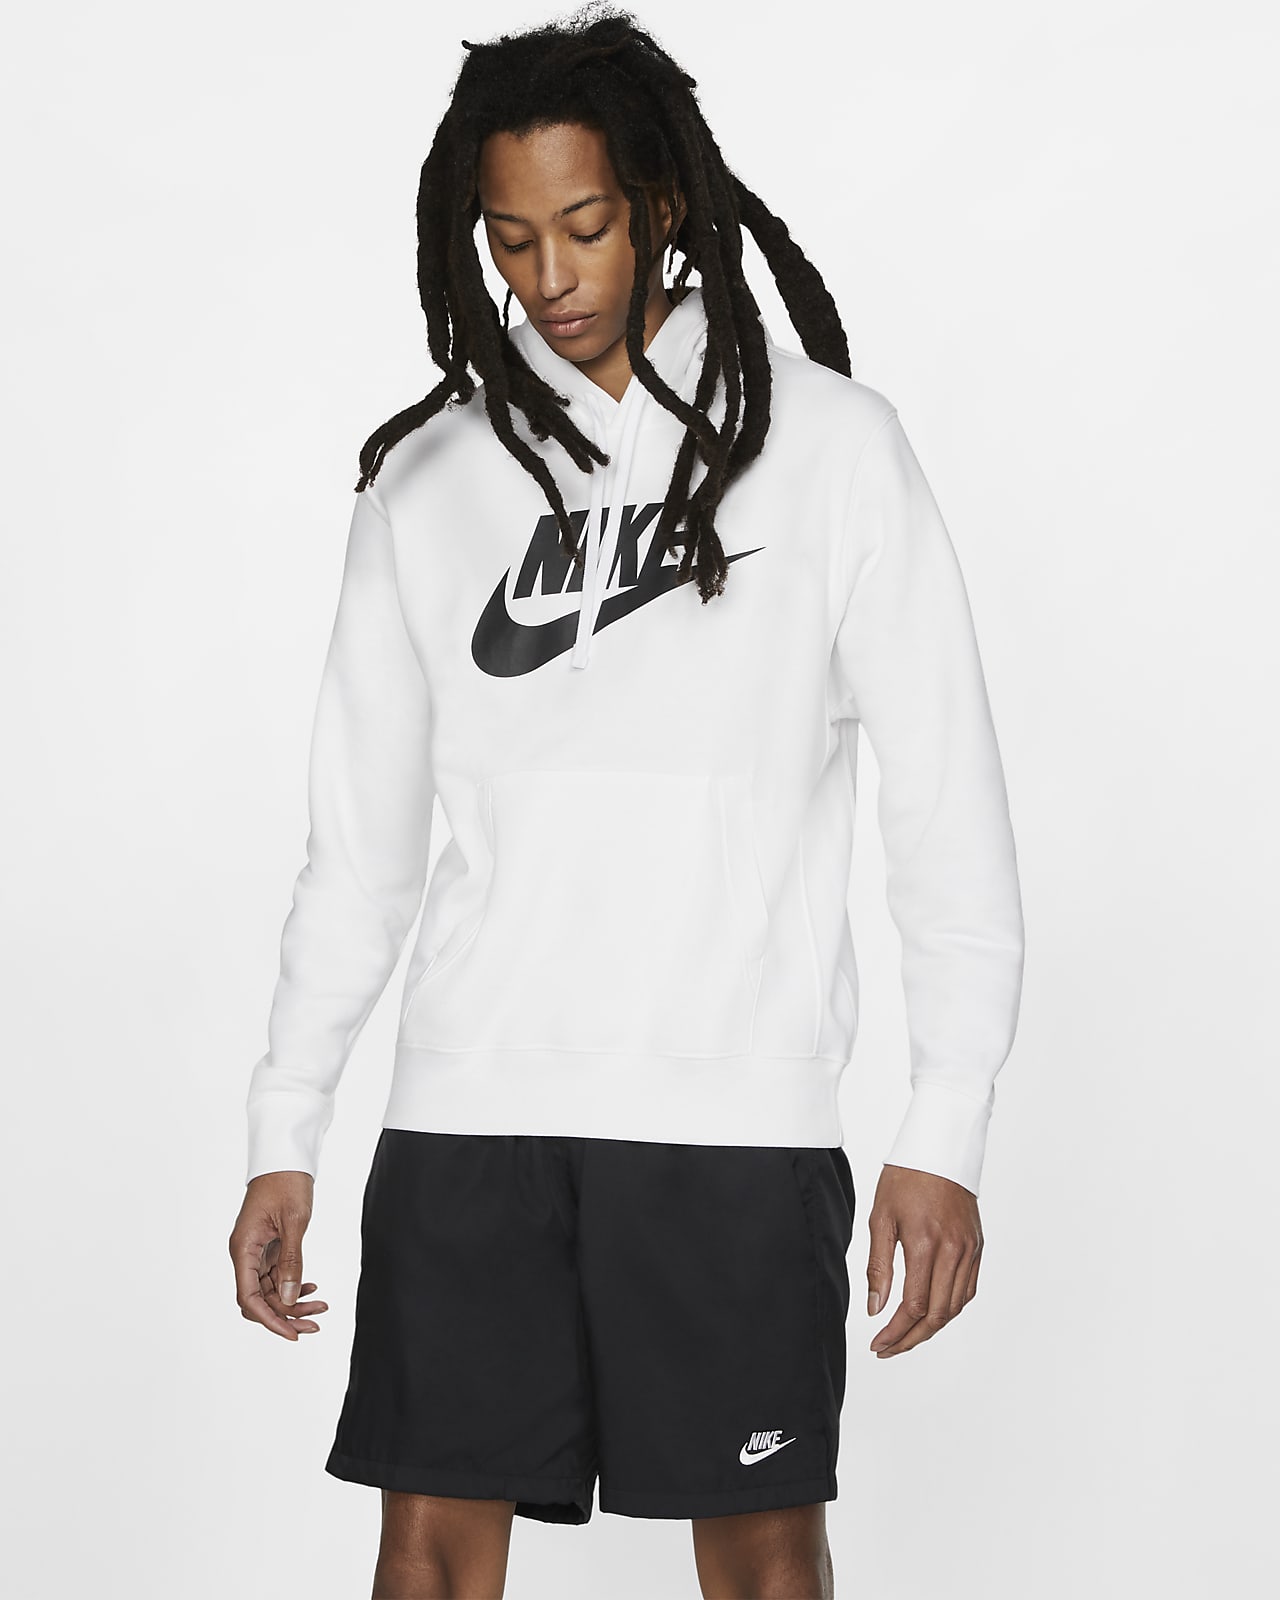 Vakman geest samenzwering Nike Sportswear Club Fleece Men's Graphic Pullover Hoodie. Nike.com